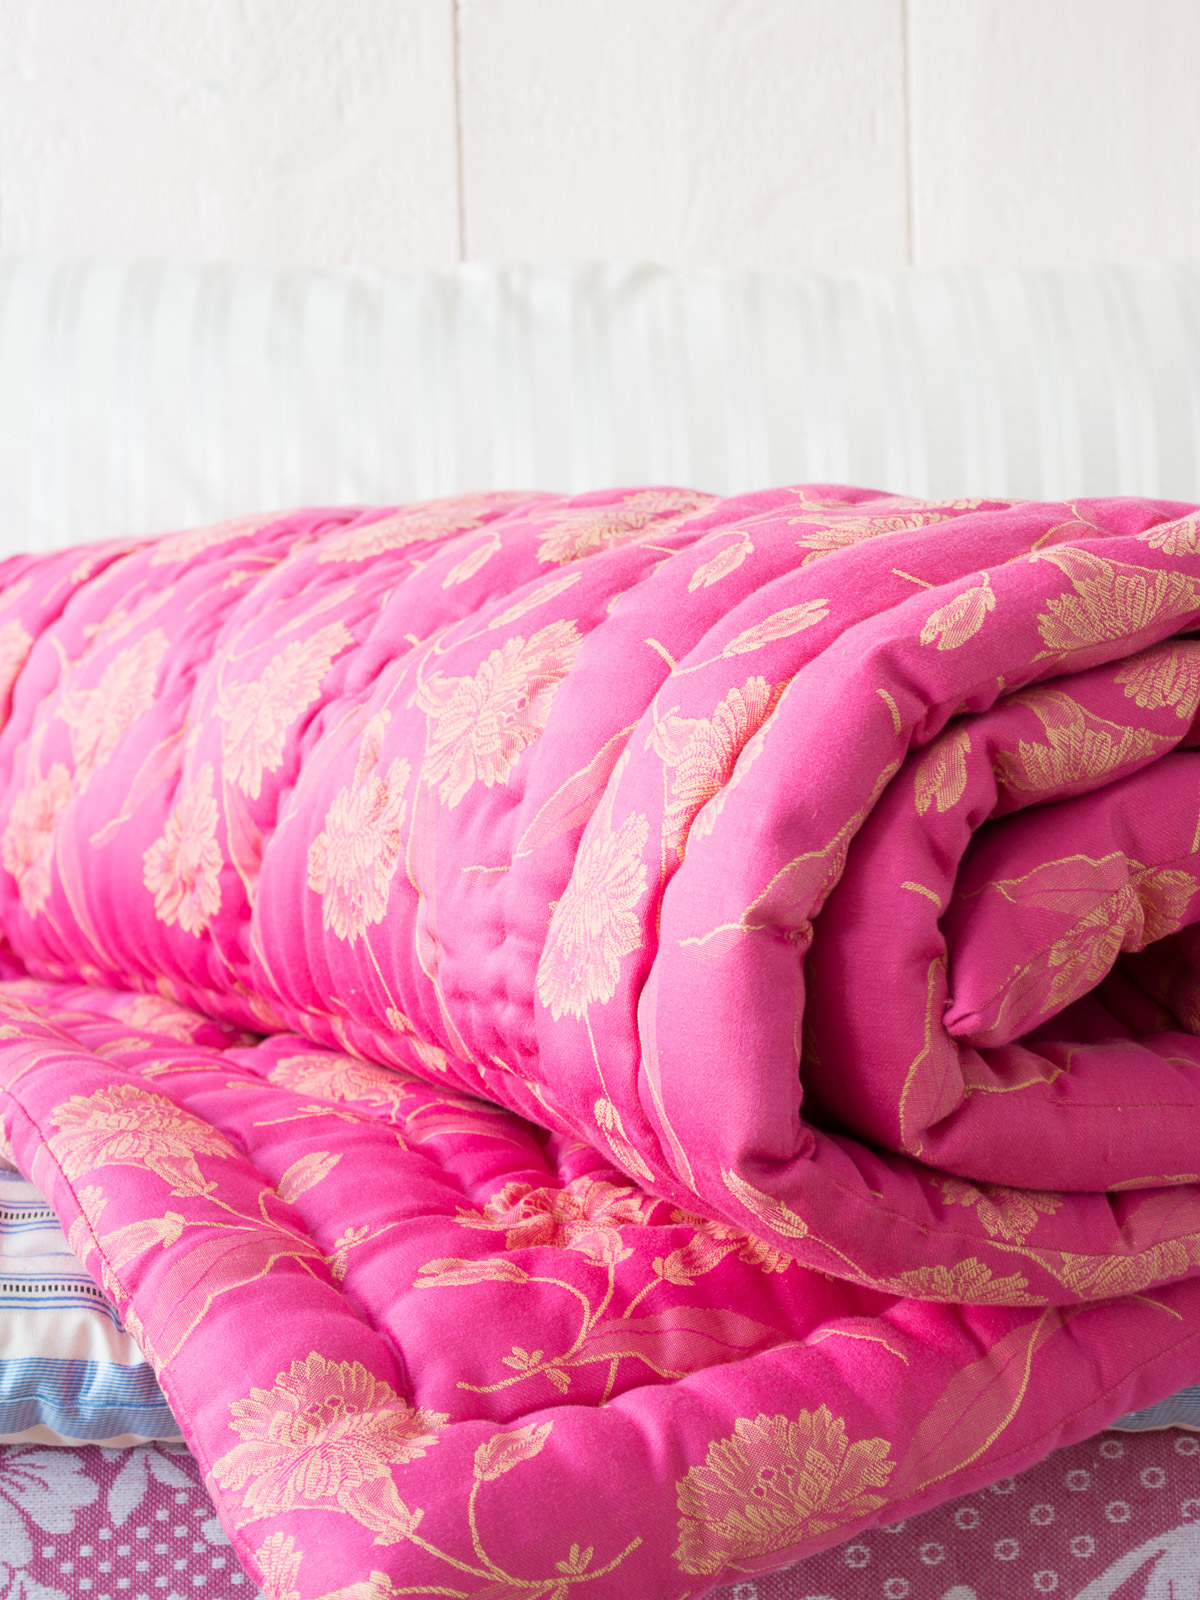 quilted mattress dark pink with yellow 180x50 cm